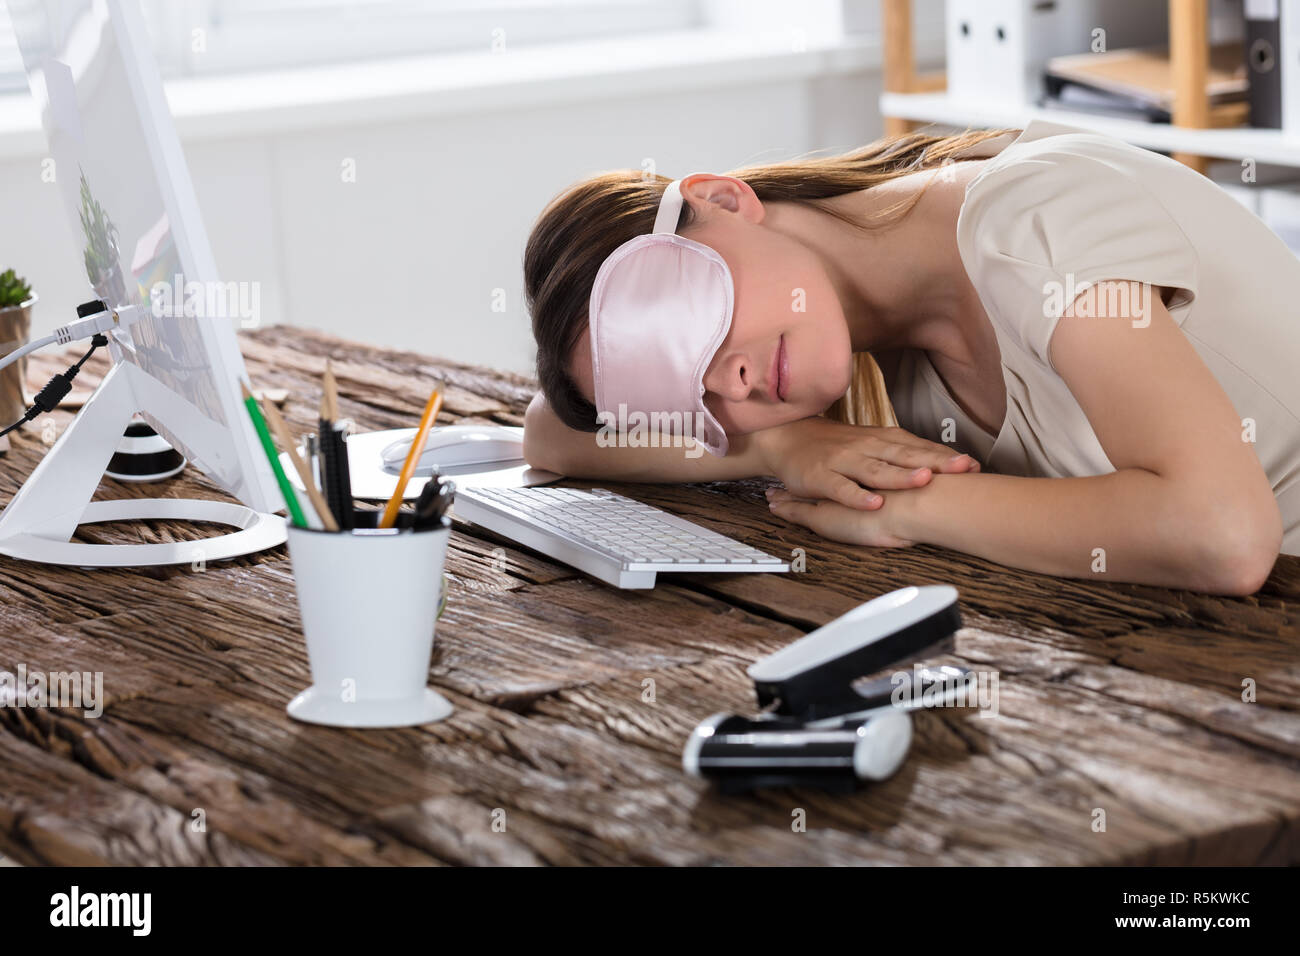 Woman Sleeping On Office Desk Stock Photo 227245296 Alamy